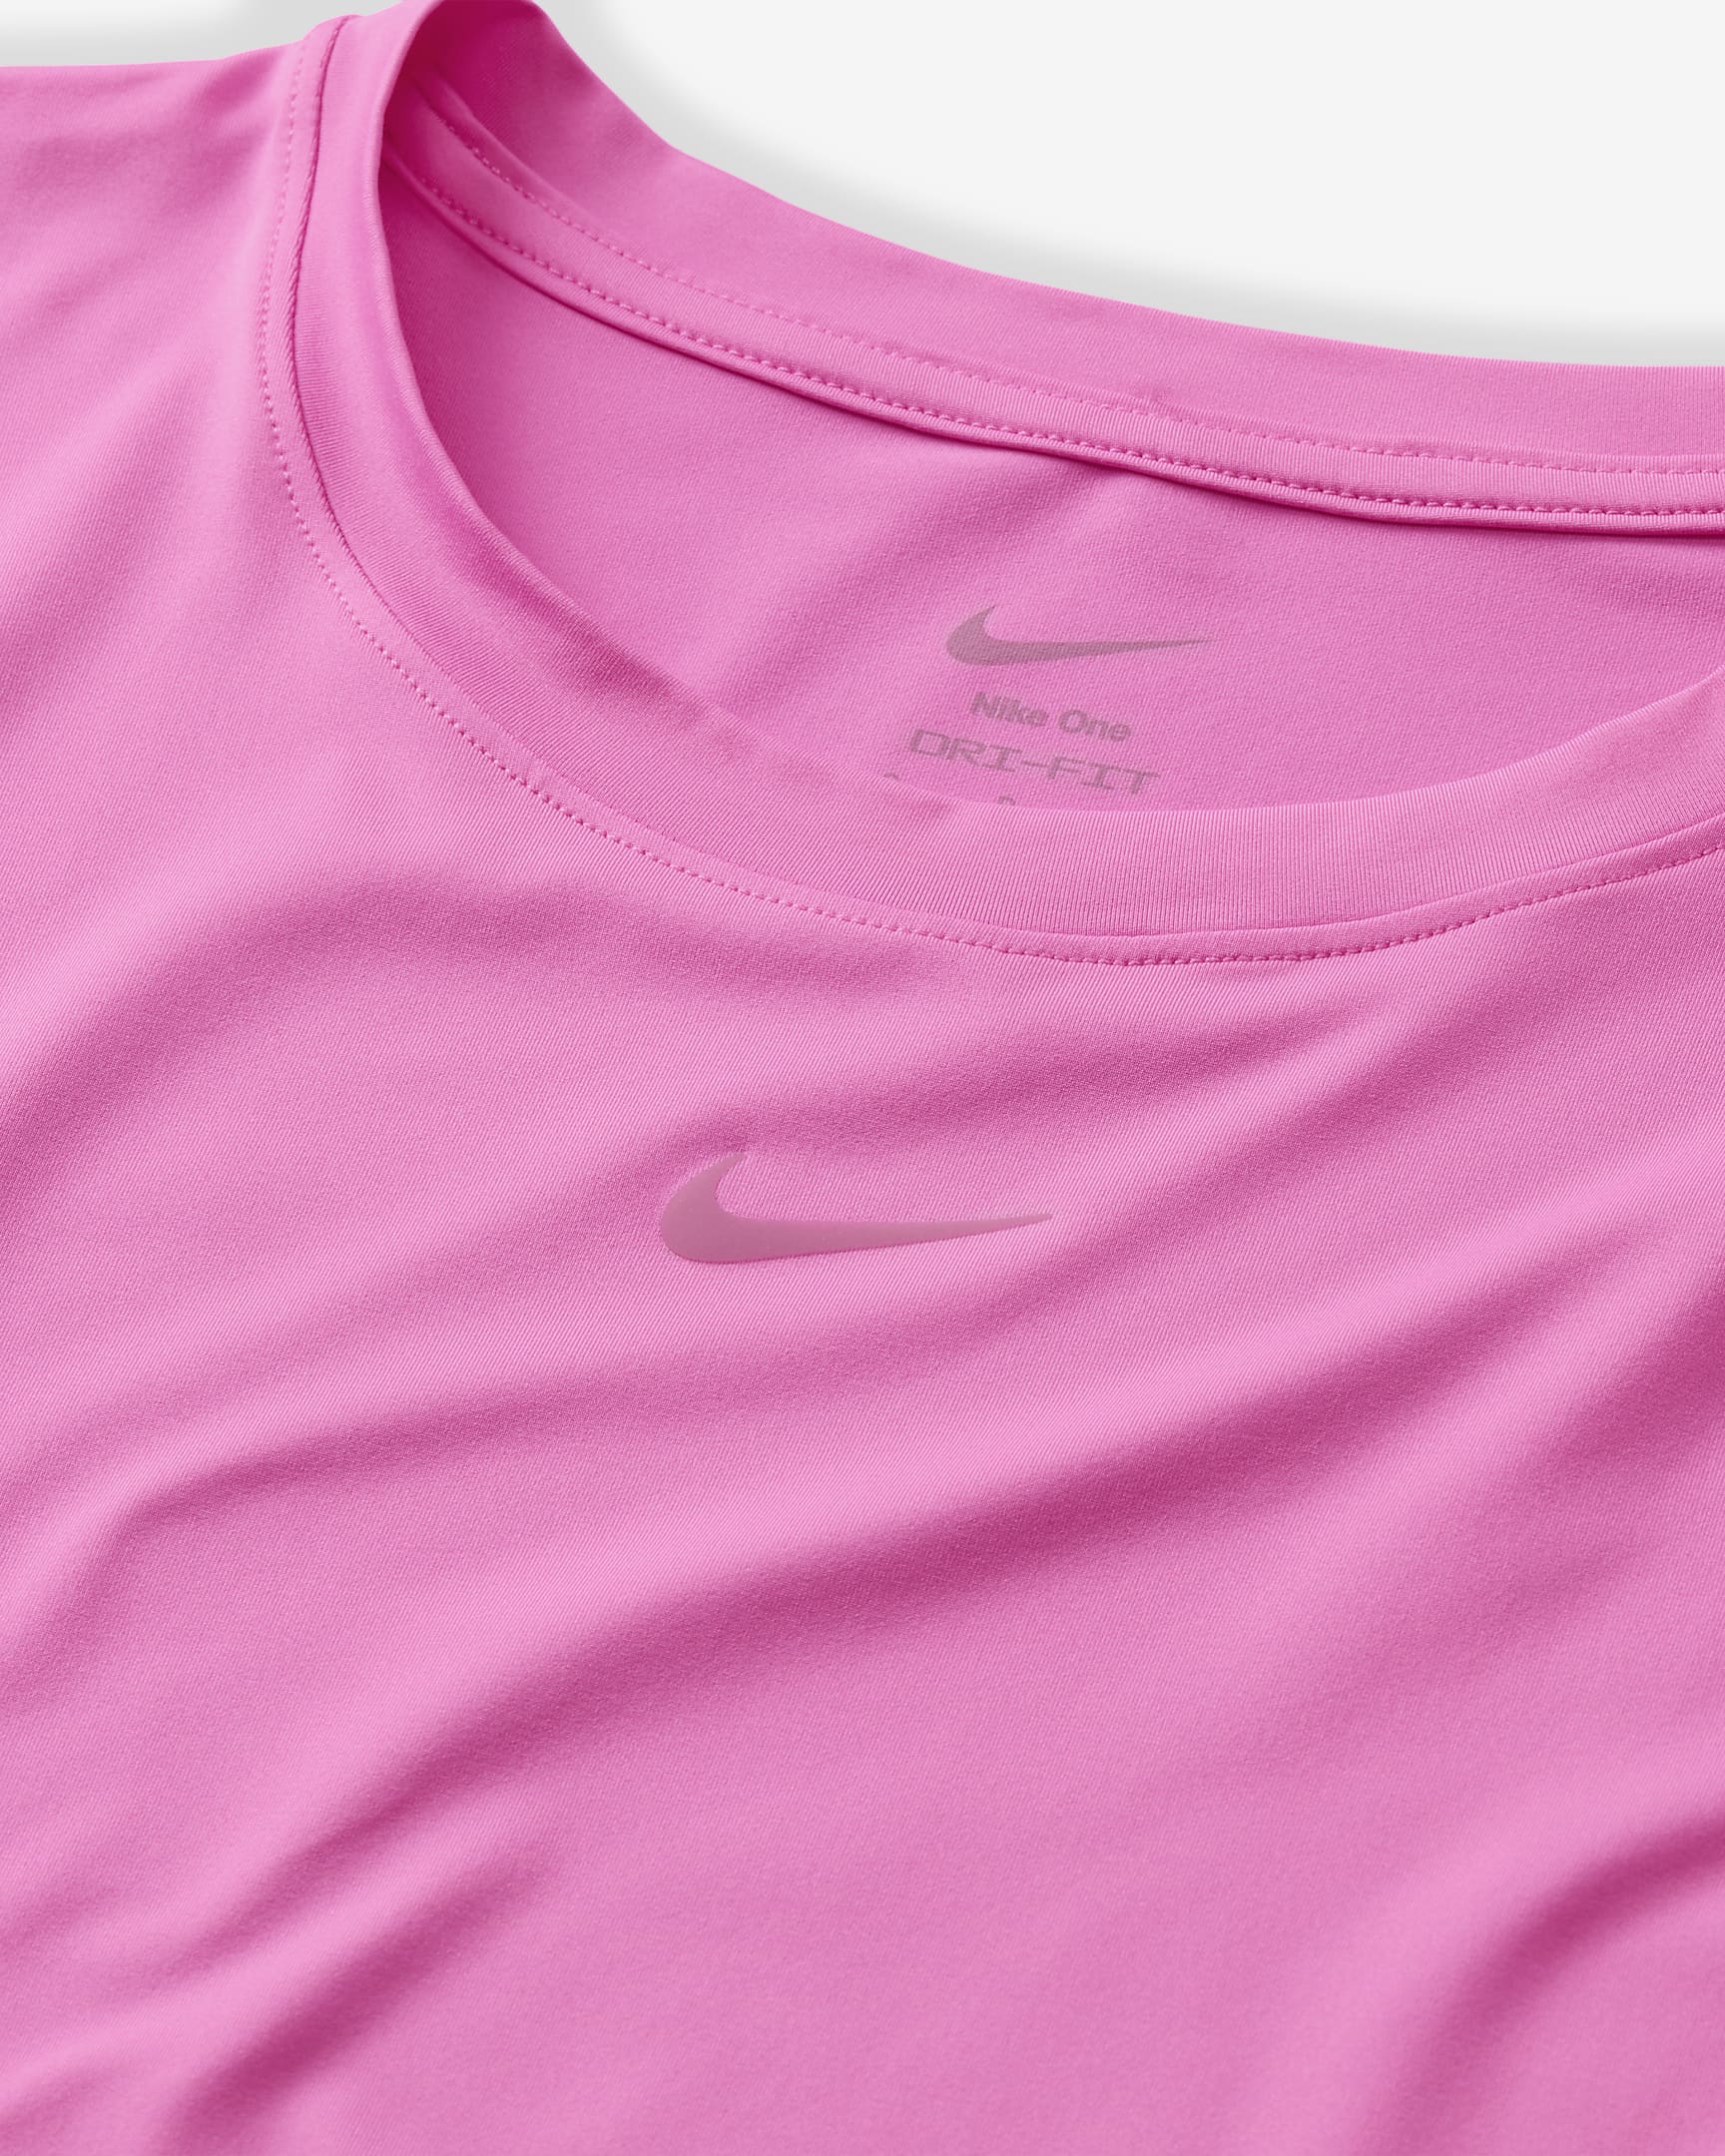 Nike One Classic Women's Dri-FIT Short-Sleeve Cropped Top. Nike.com